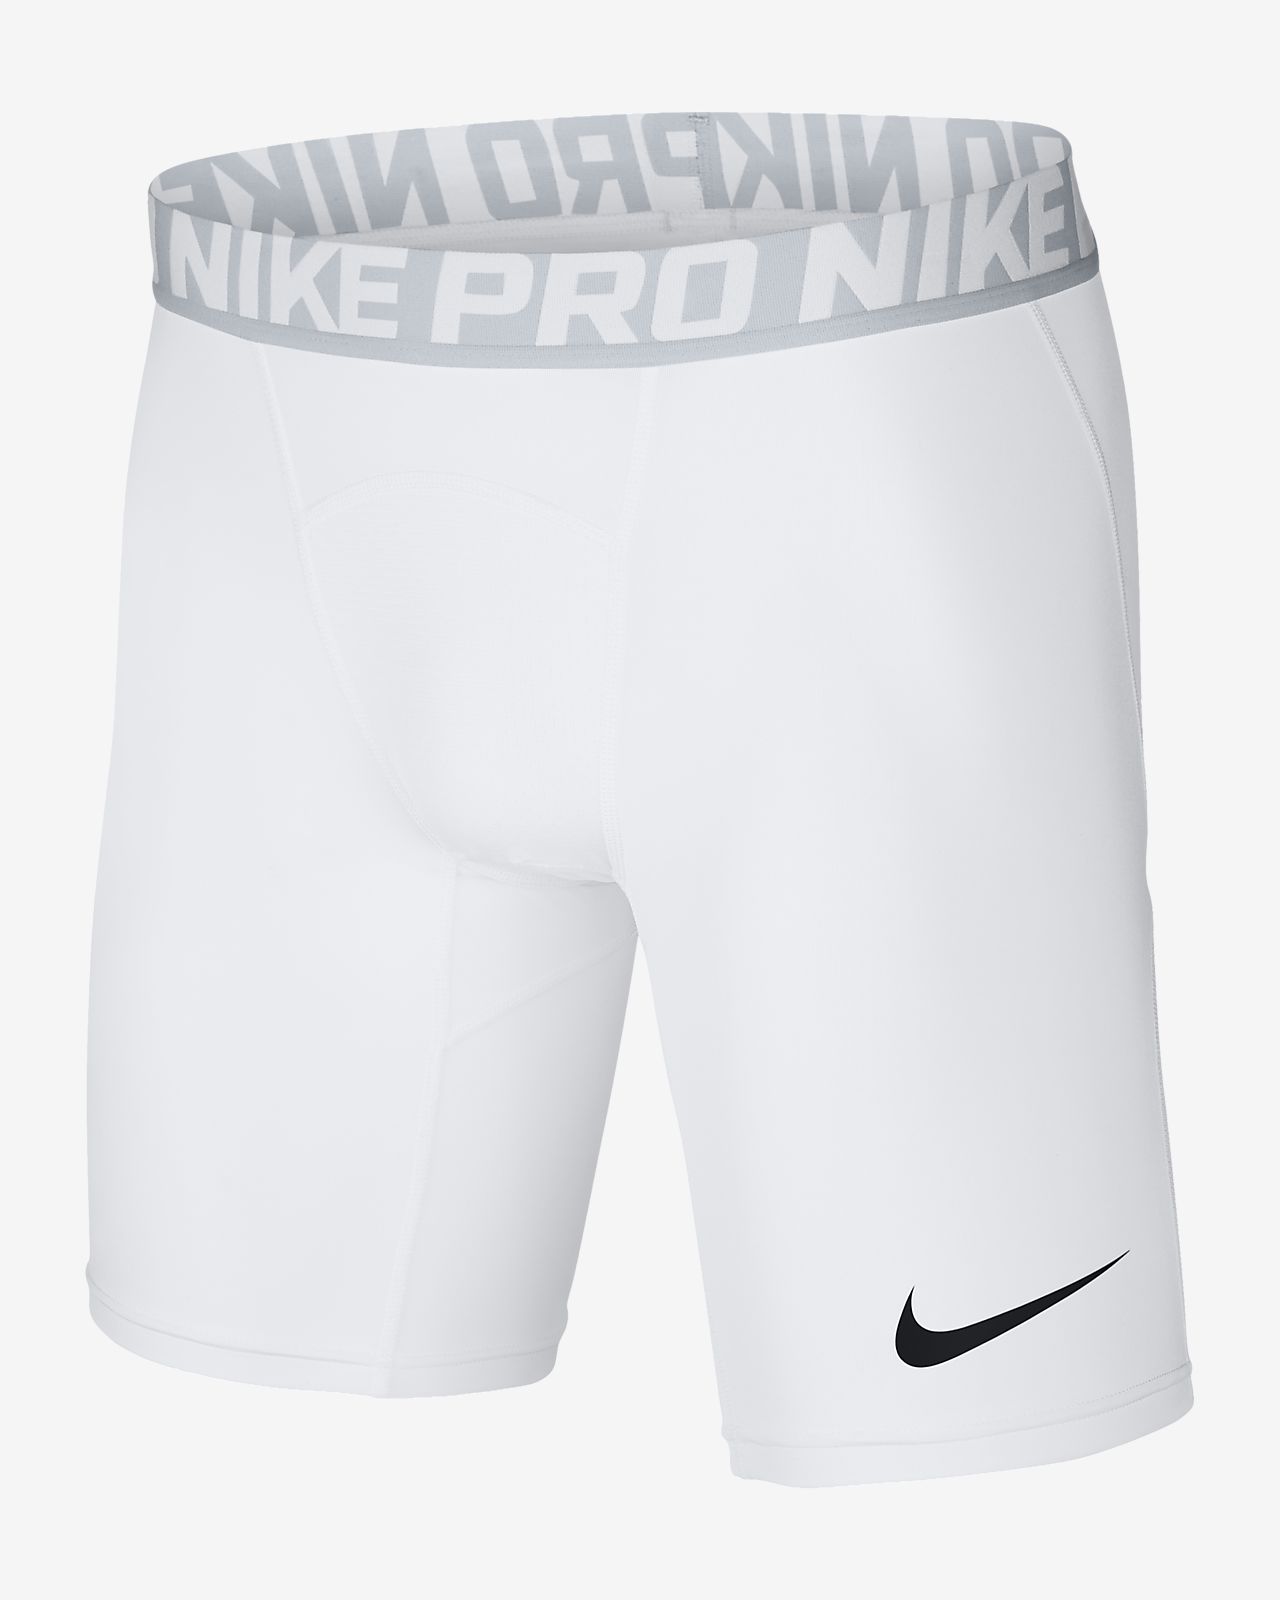 Nike Pro Men S 6 Training Shorts